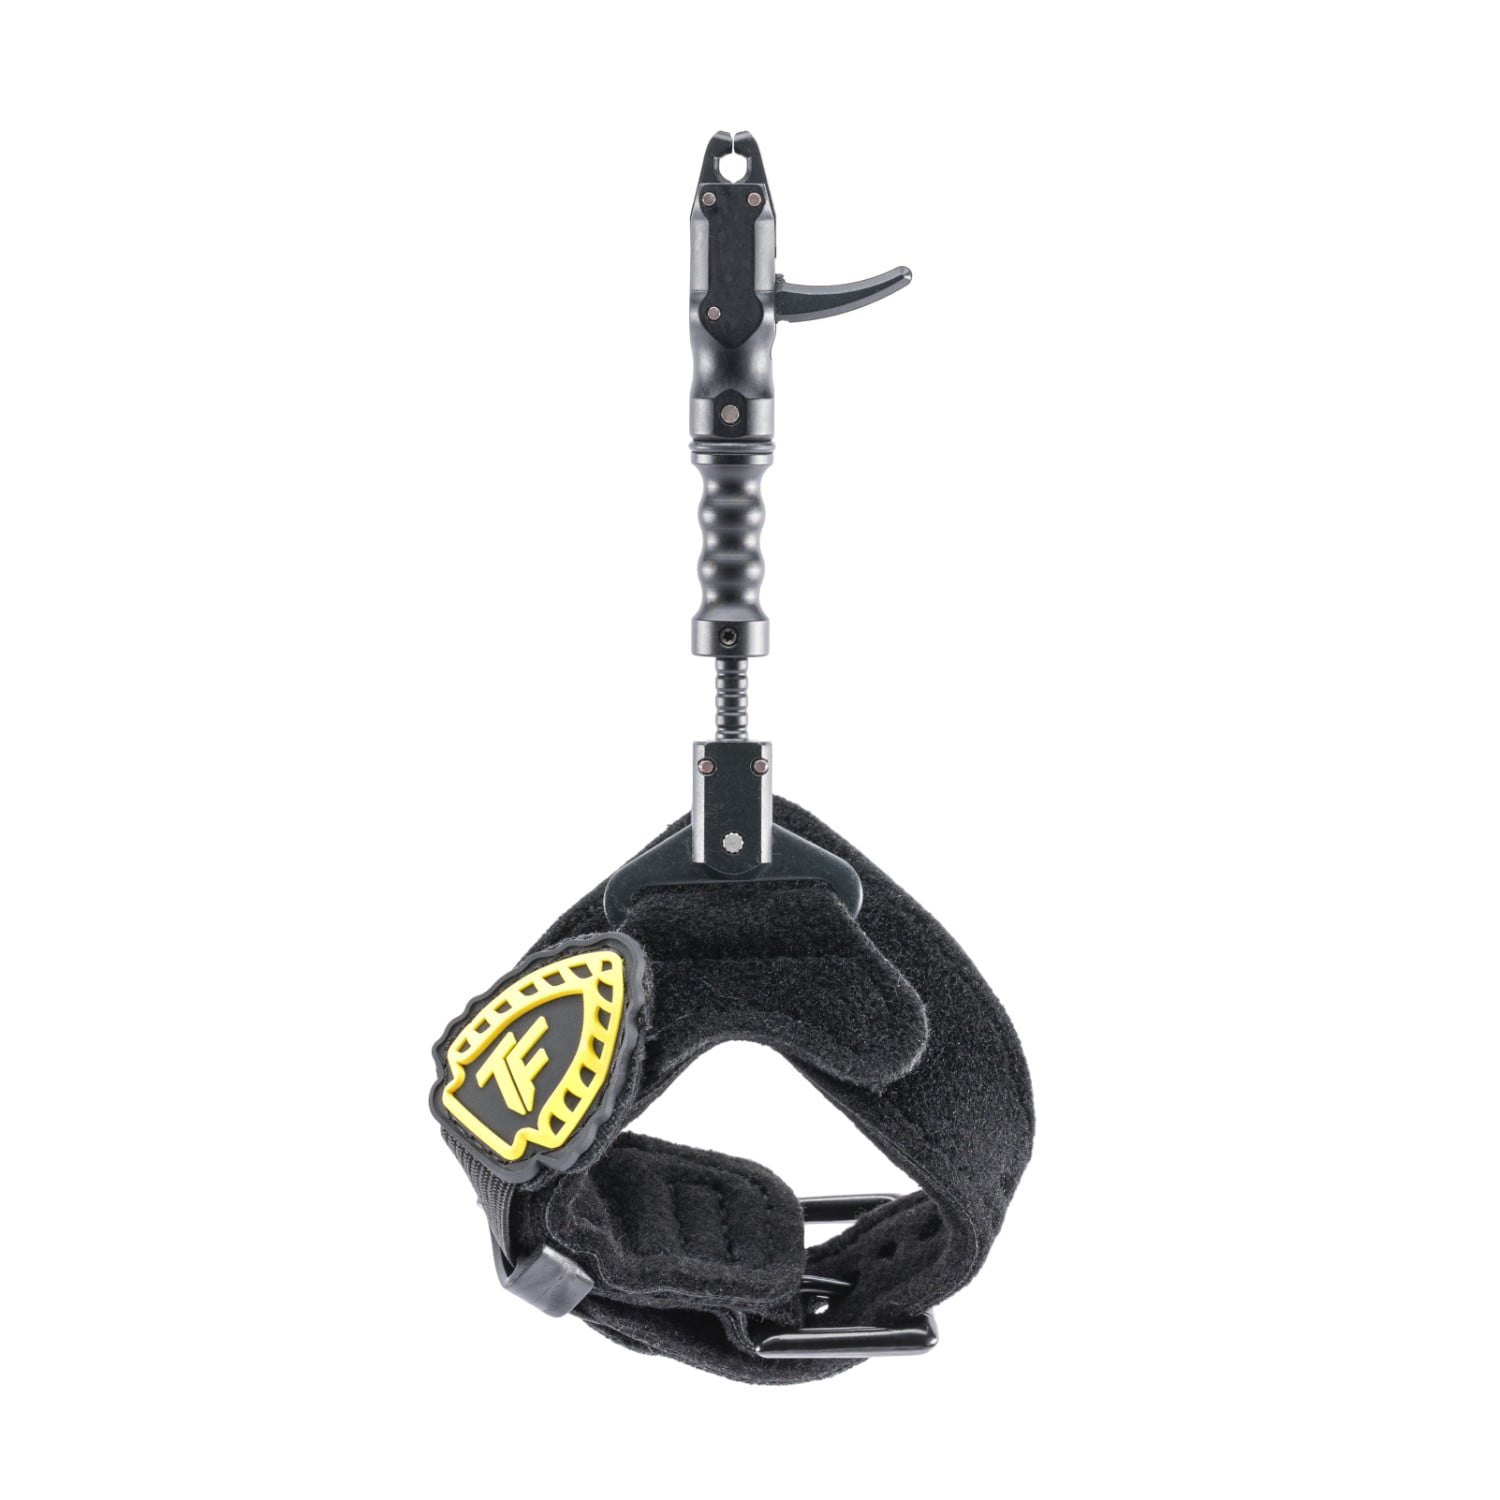 Tru Fire Patriot Release Hook and Loop Fastener Wrist Strap PT 